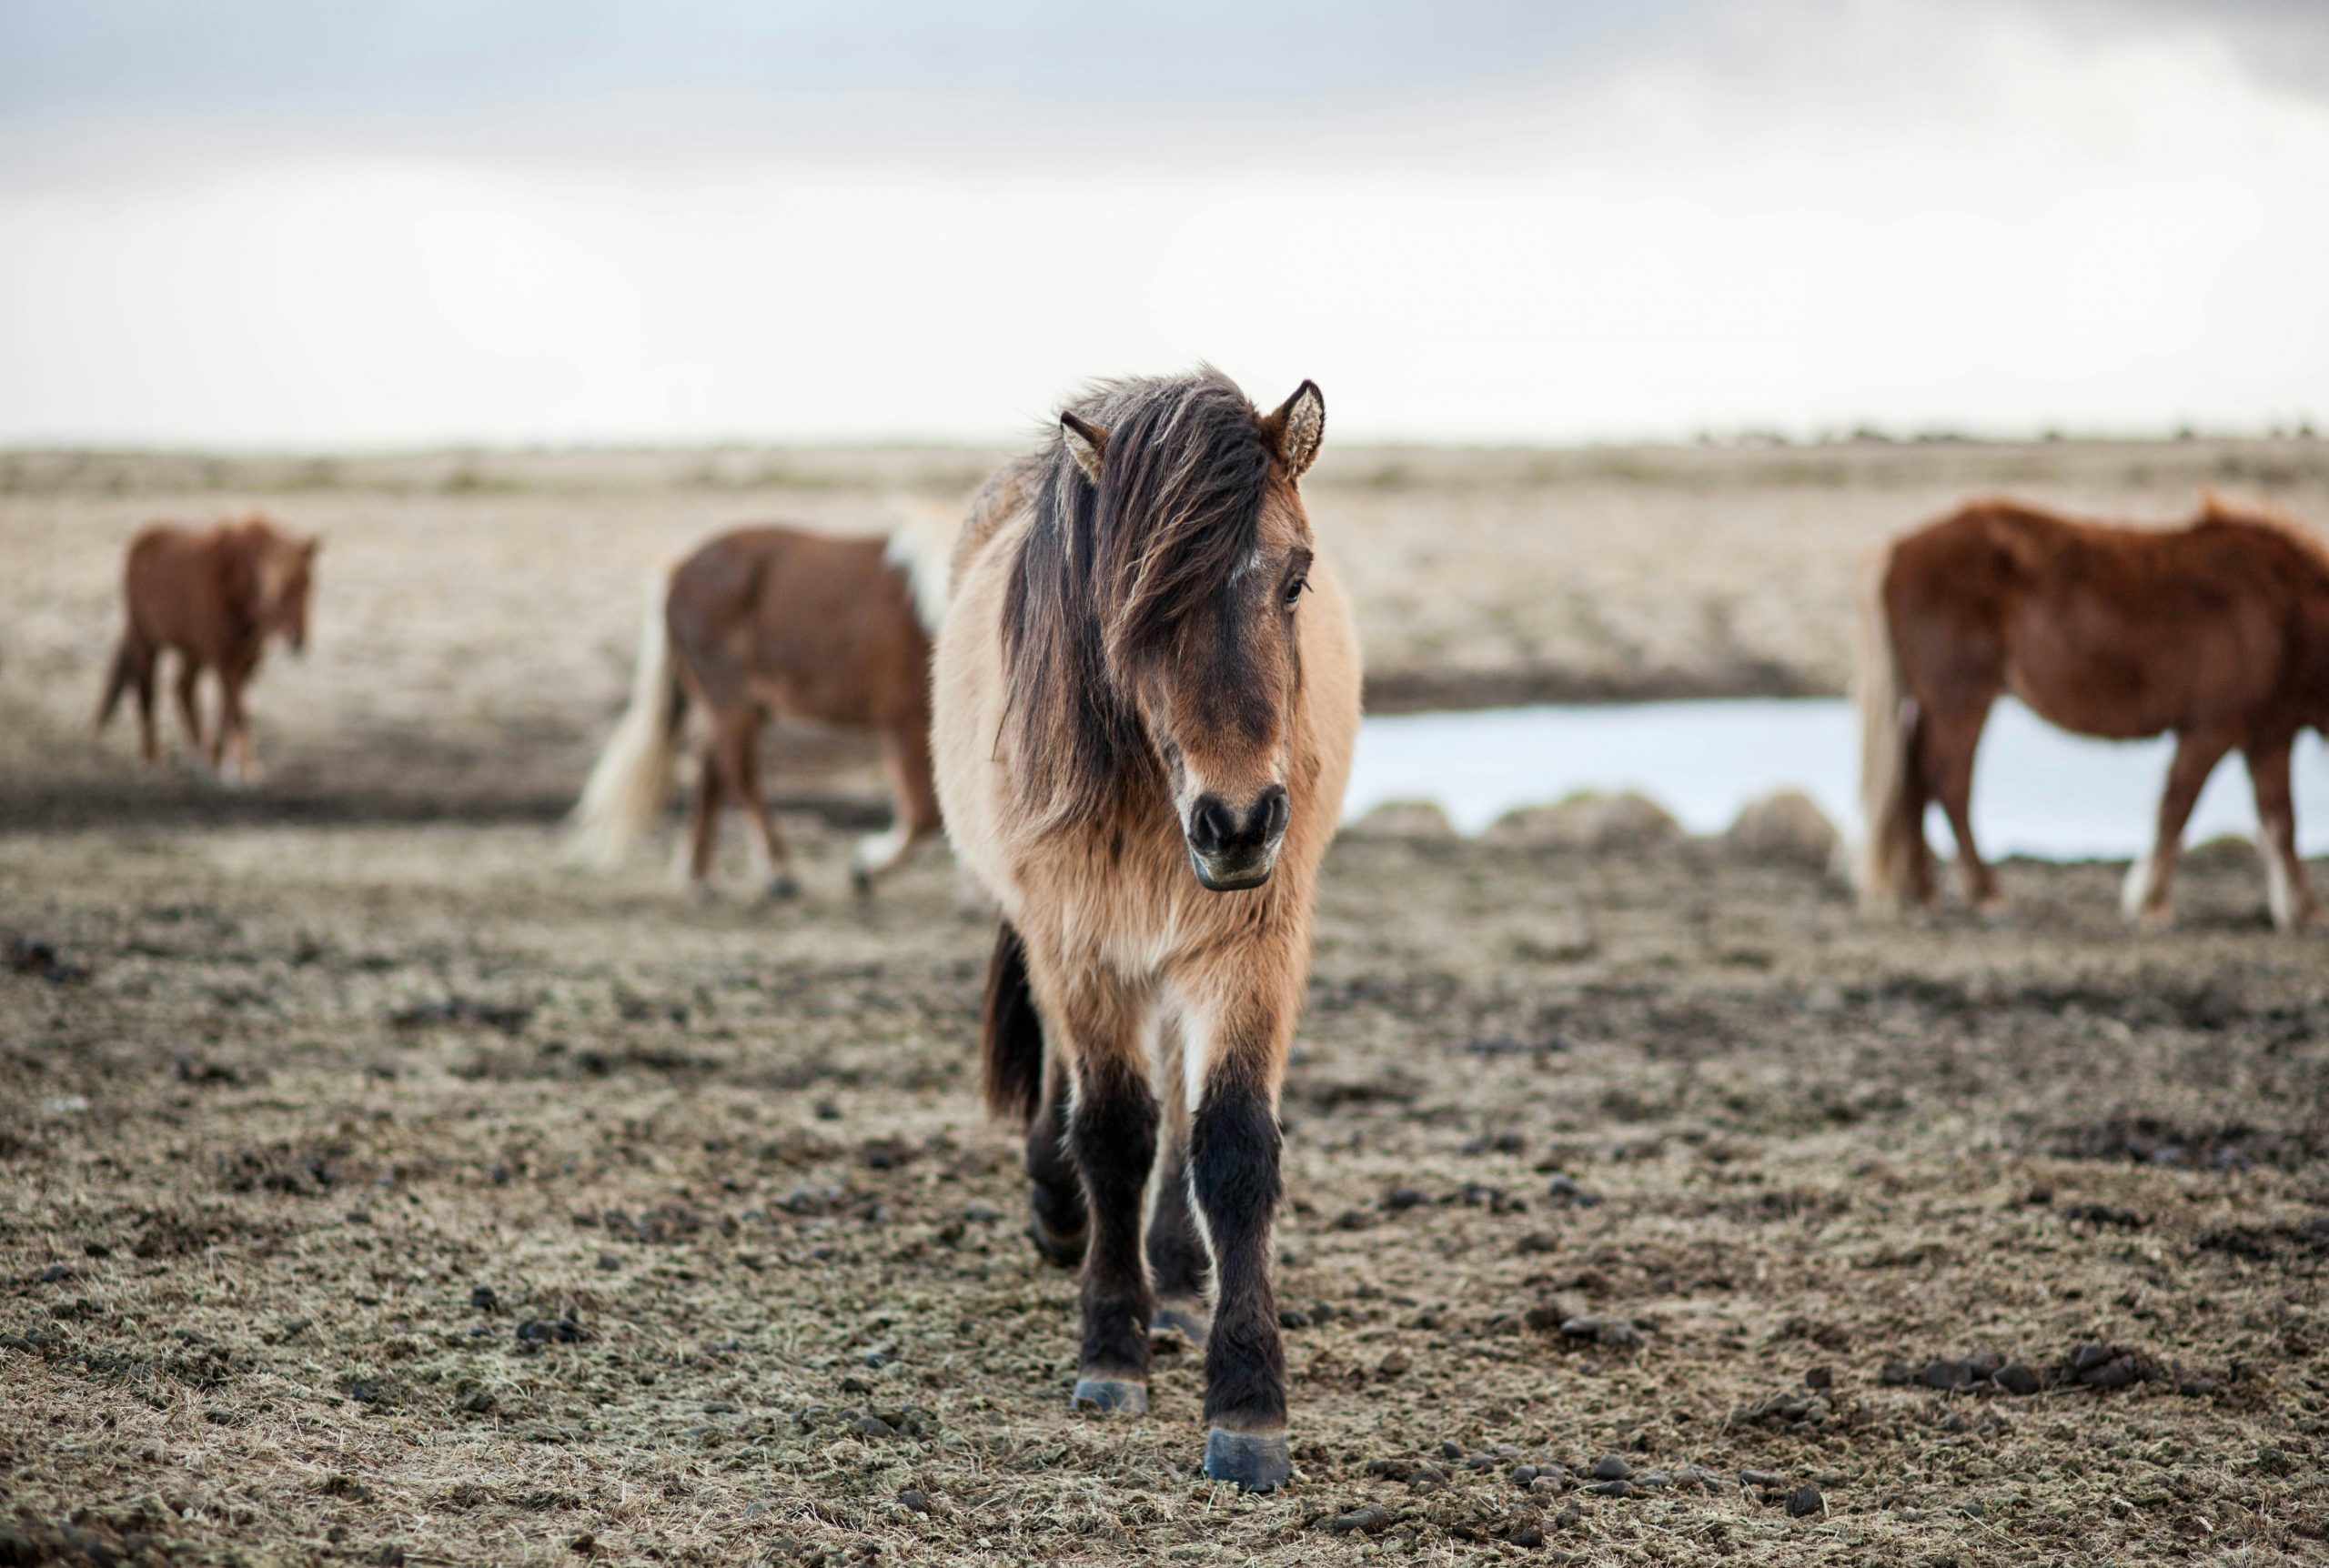 OnIce Horse Farm (Ontario Icelandic Horse Farm) - Guess who's back